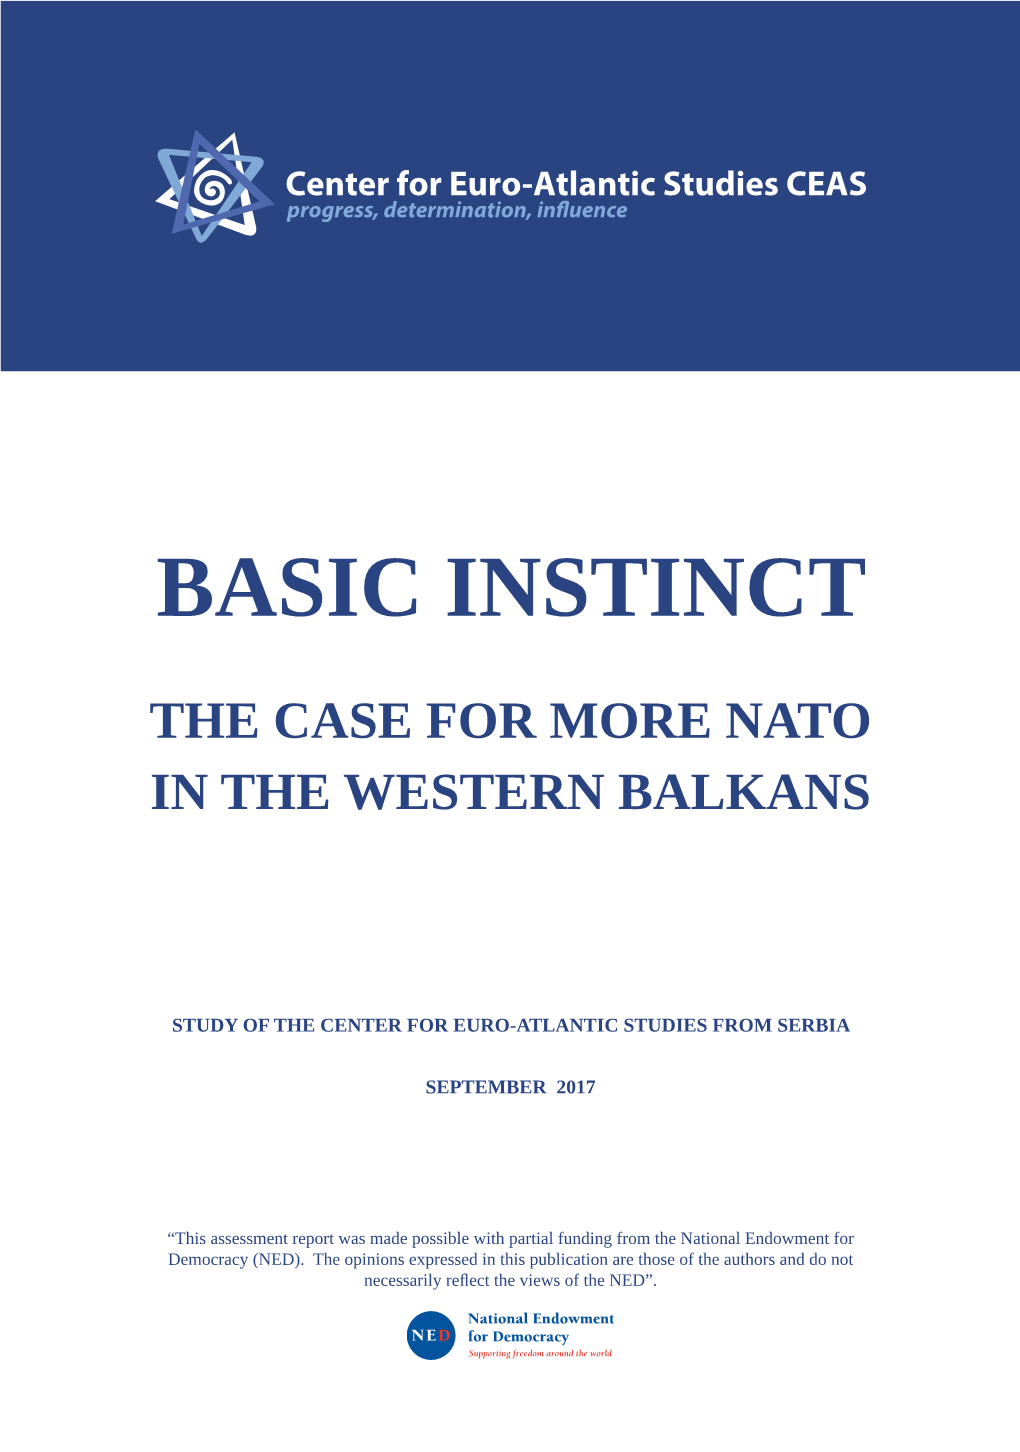 Basic Instinct: the Case for More NATO in the Western Balkans